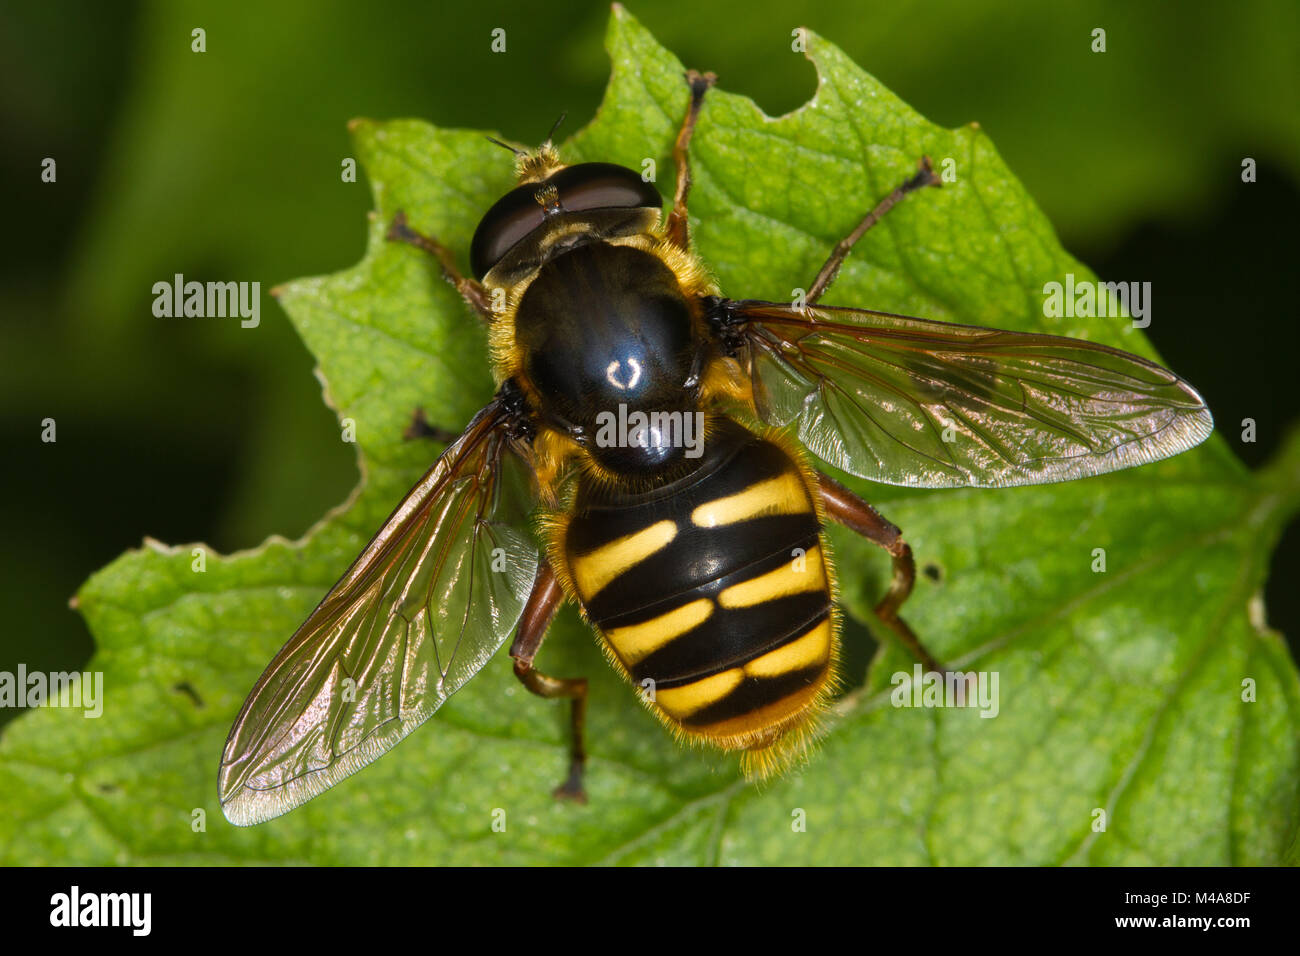 Sericomyia silentis, eine Wespe - Hoverfly nachahmen, ruht auf einem Blatt Stockfoto